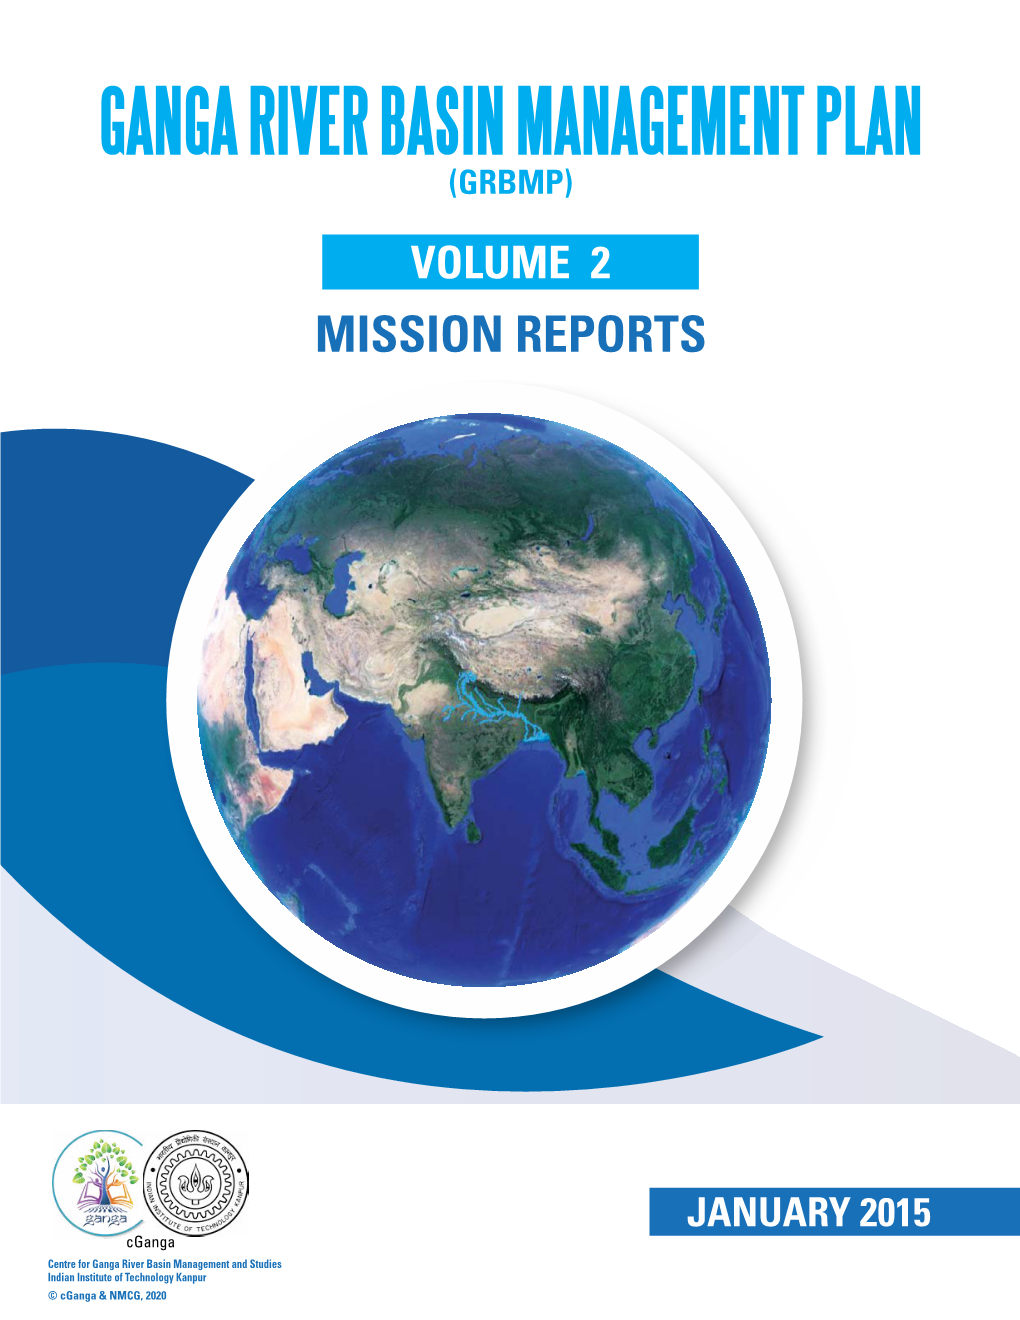 Ganga River Basin Management Plan (GRBMP) Volume 2 Mission Reports